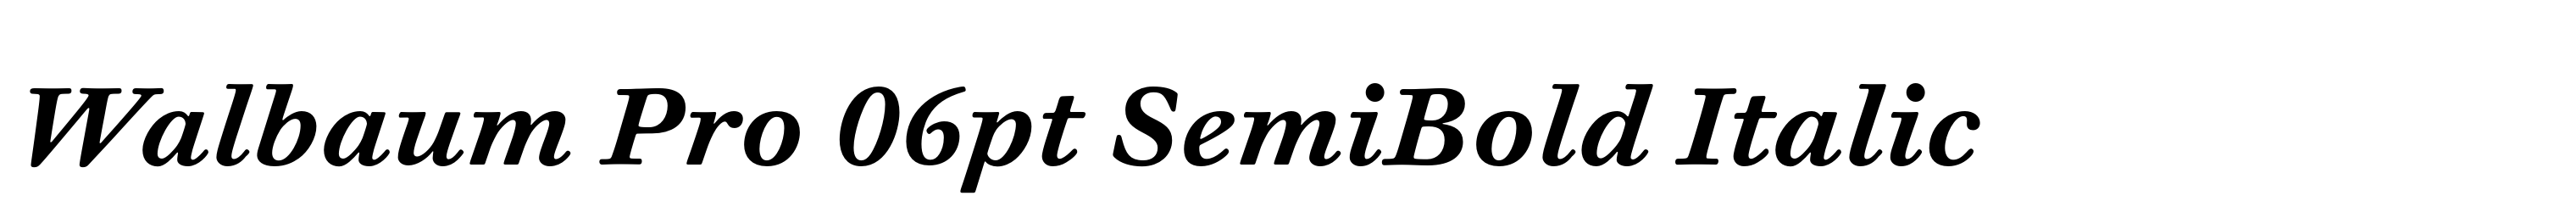 Walbaum Pro 06pt SemiBold Italic